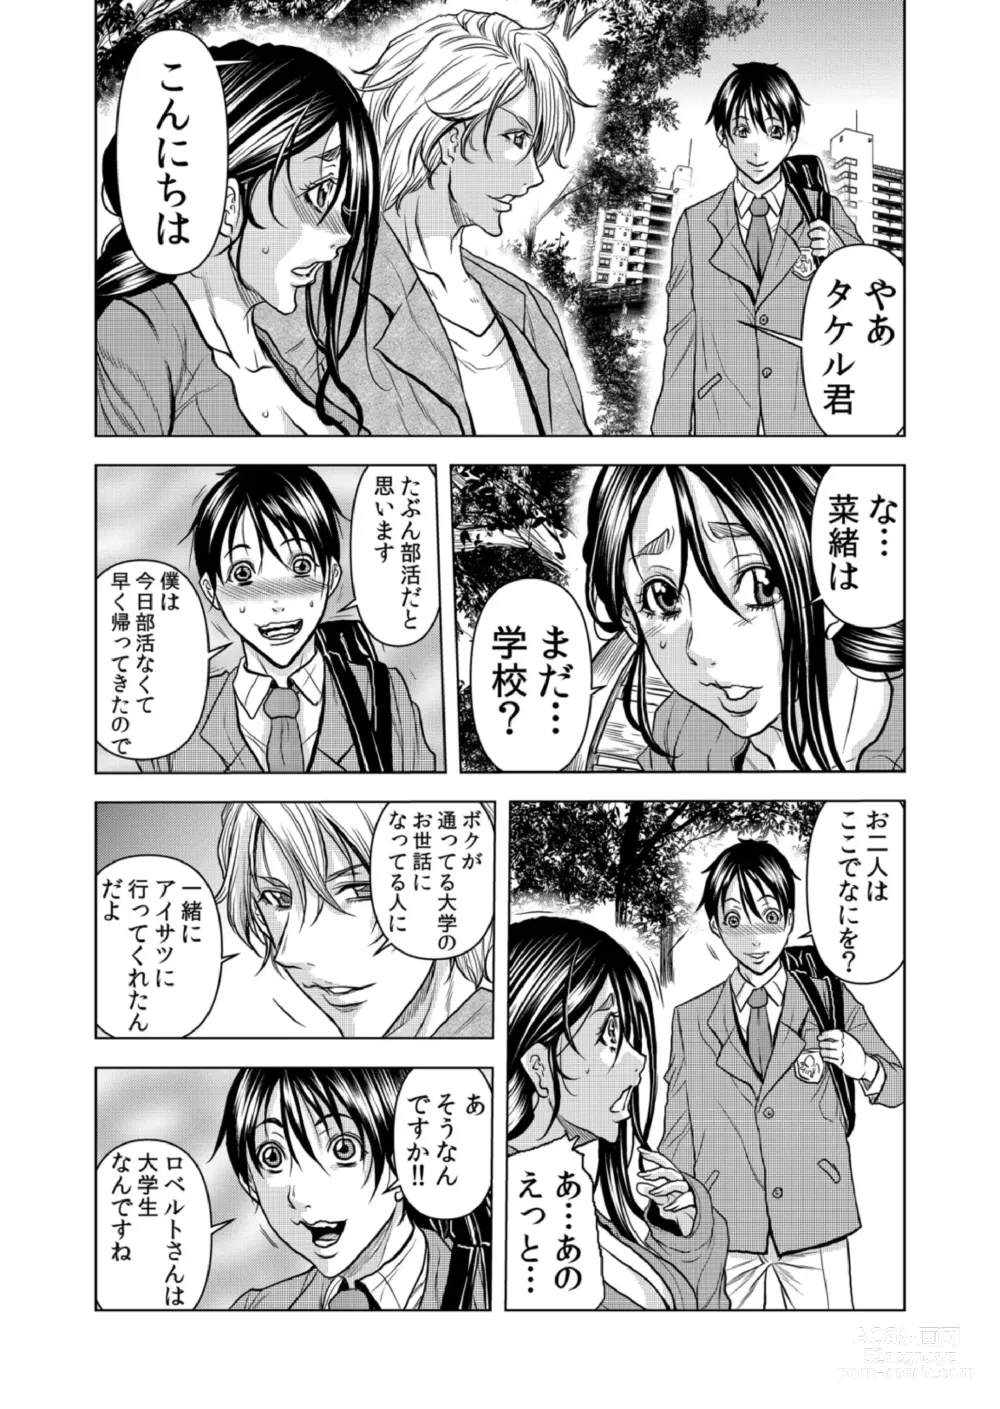 Page 2 of manga Mamasan,yobai ha OK desuka? VOL9